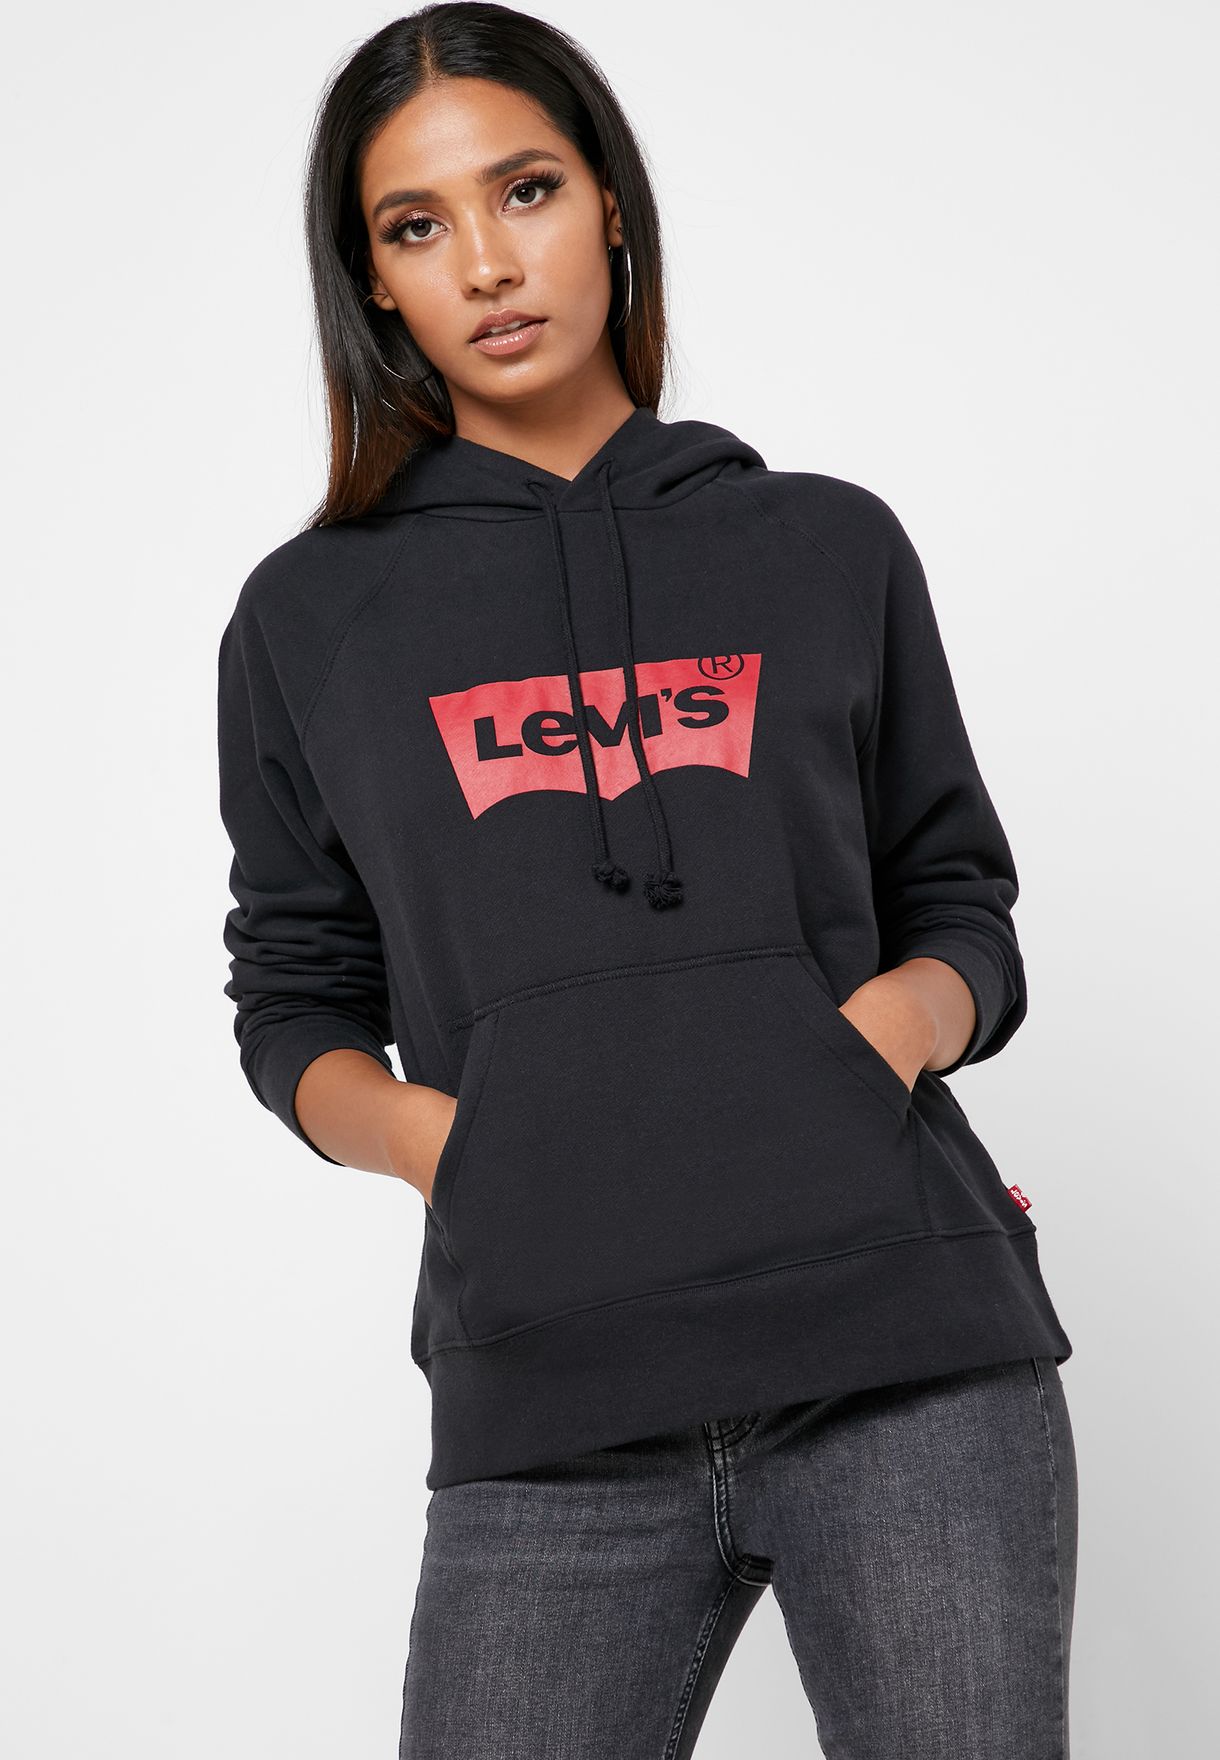 levis hoodie for women